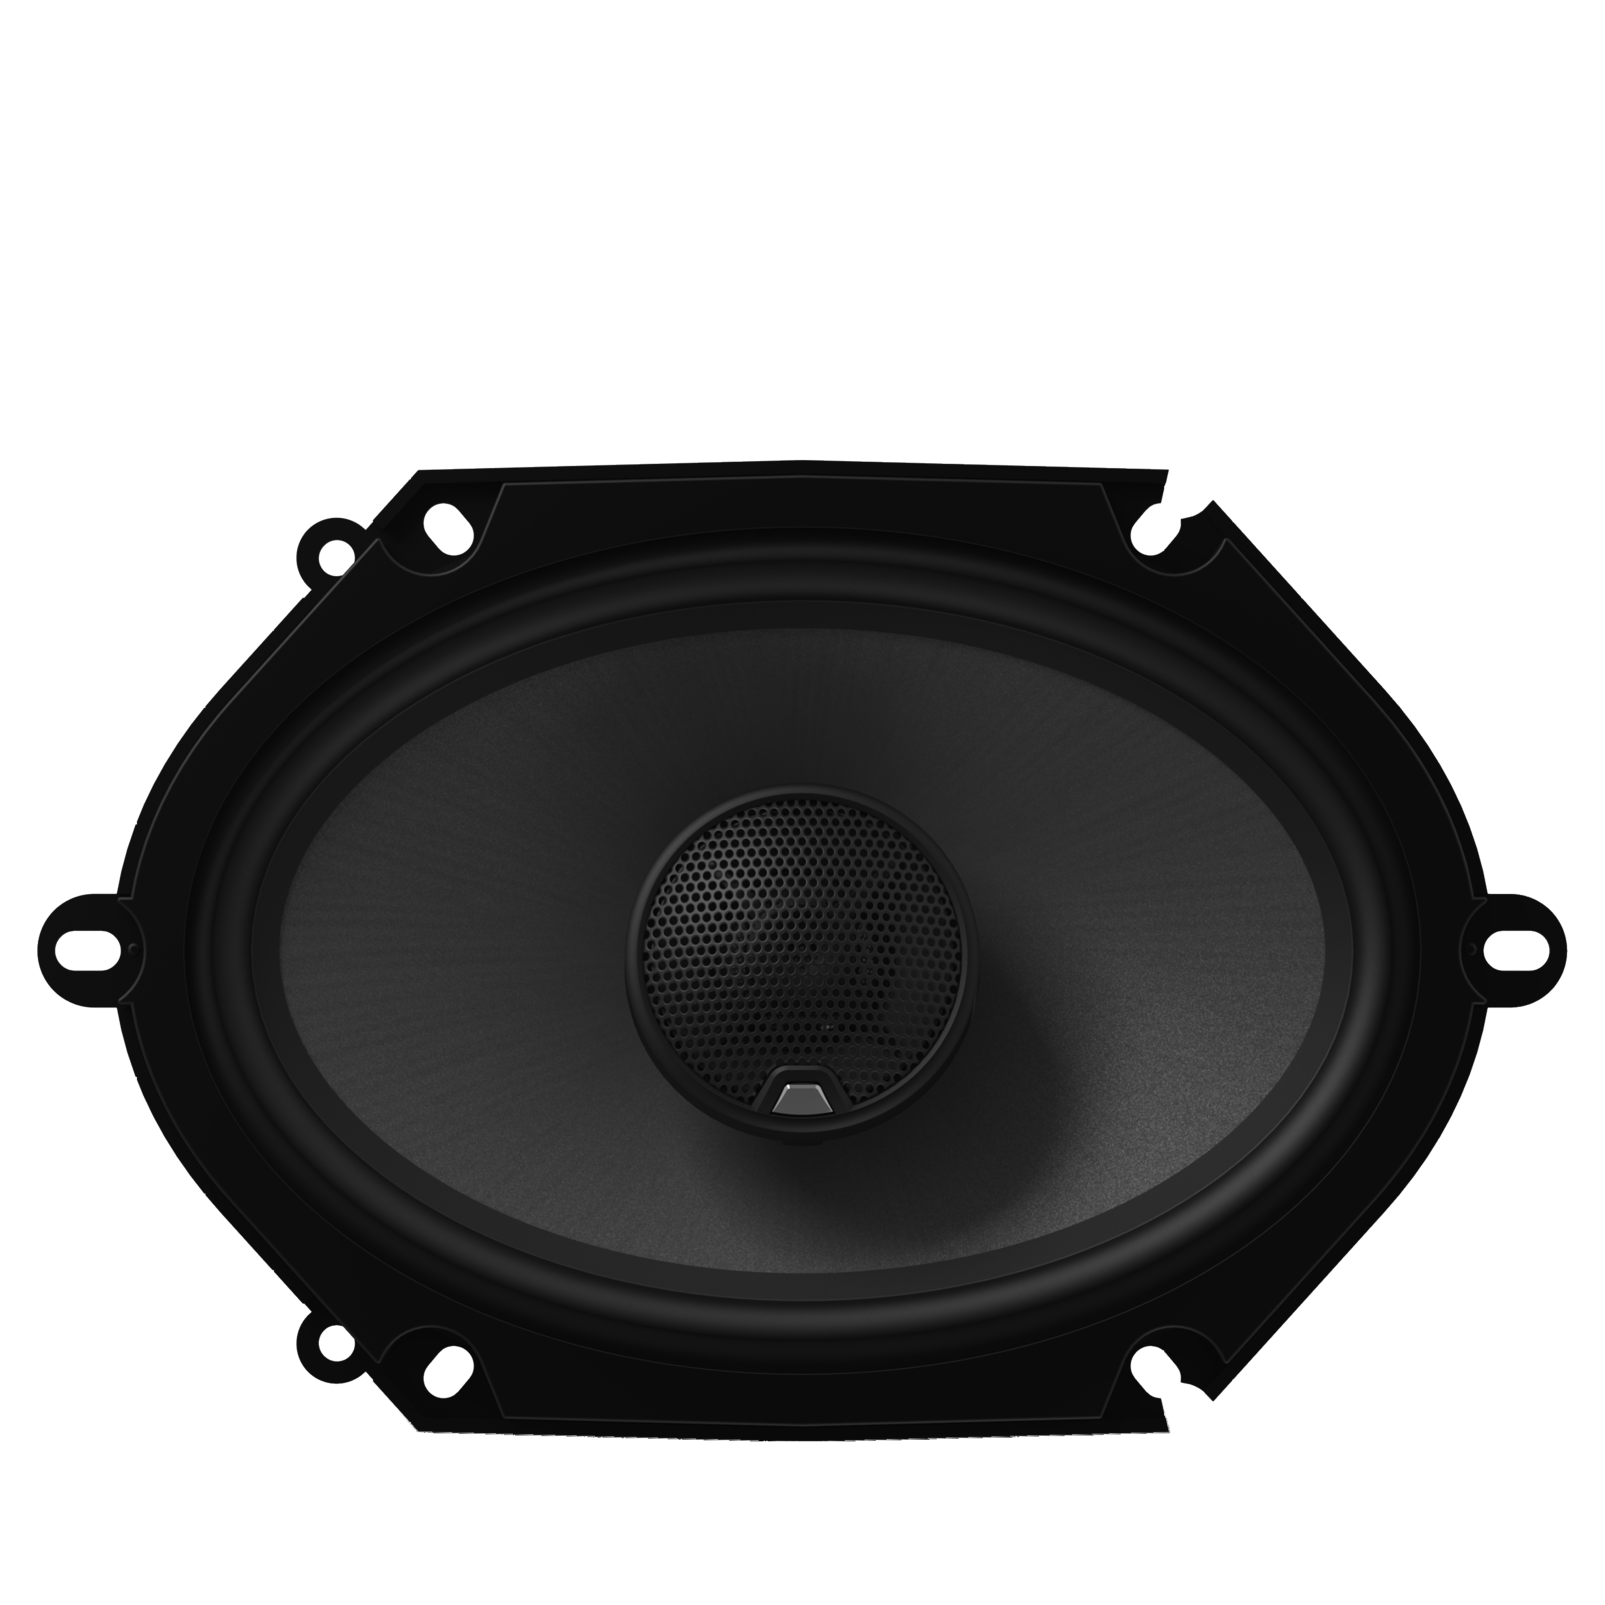 GTO8629 - Black - 180-Watt, Two-Way 5" x 7" Speaker System - Hero